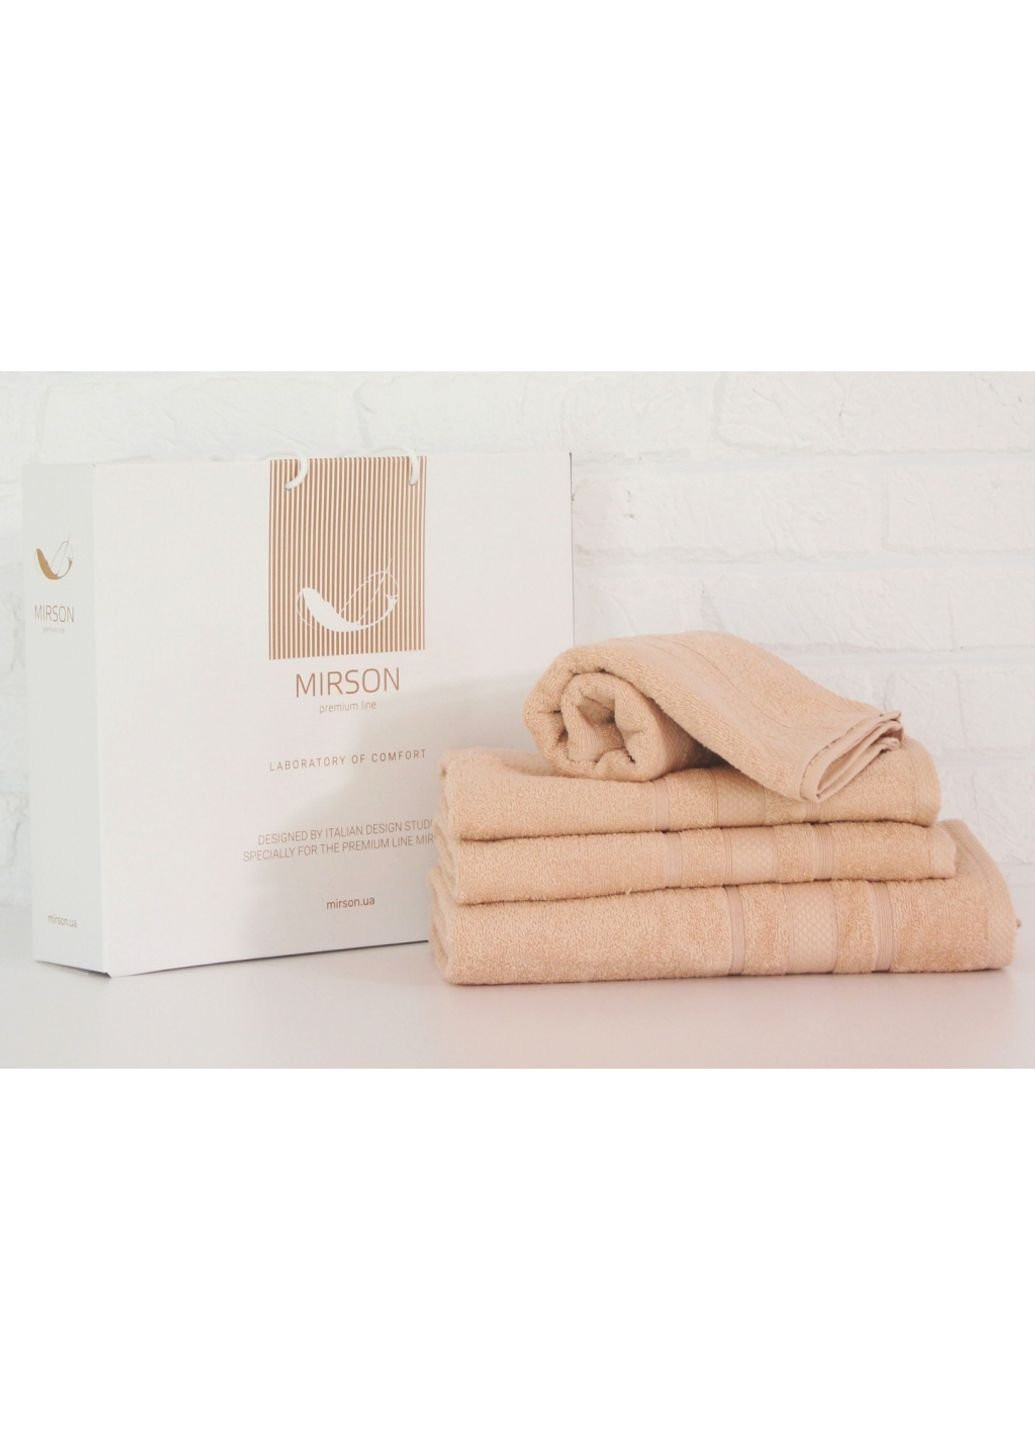 No Brand полотенце mirson набор банных №5075 elite softness ivory 40х70, 50х90, 70х140 (2200003975673) молочный производство - Украина